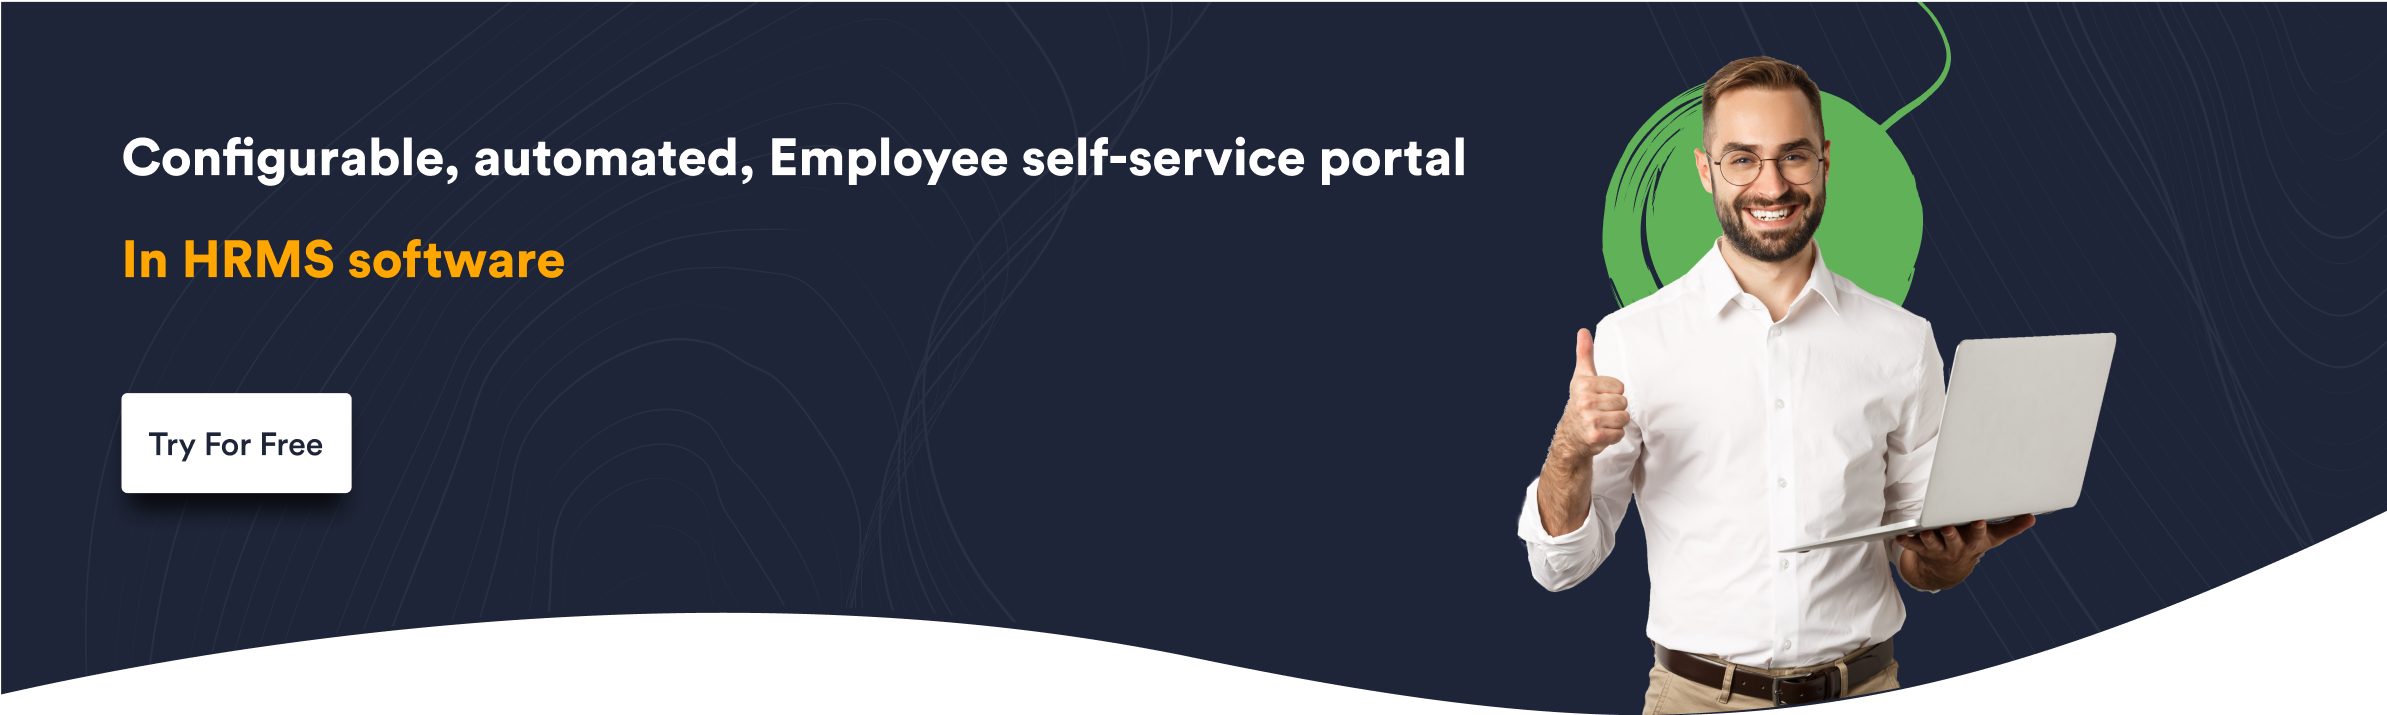 Configurable automated Employee self service portal